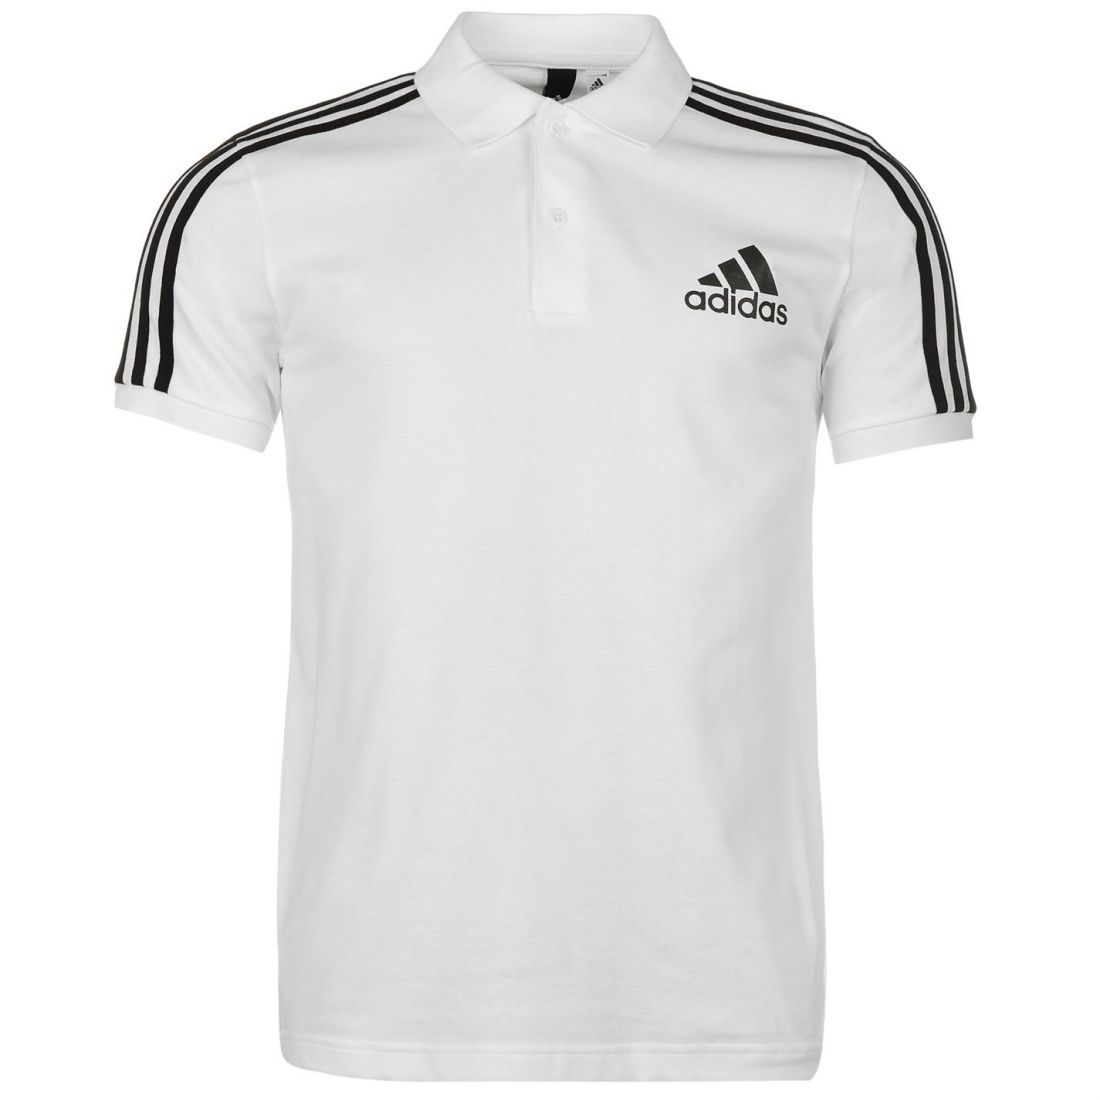 adidas Mens 3 Stripes Logo Polo Shirt Tee Top Cotton Print Casual Short ...